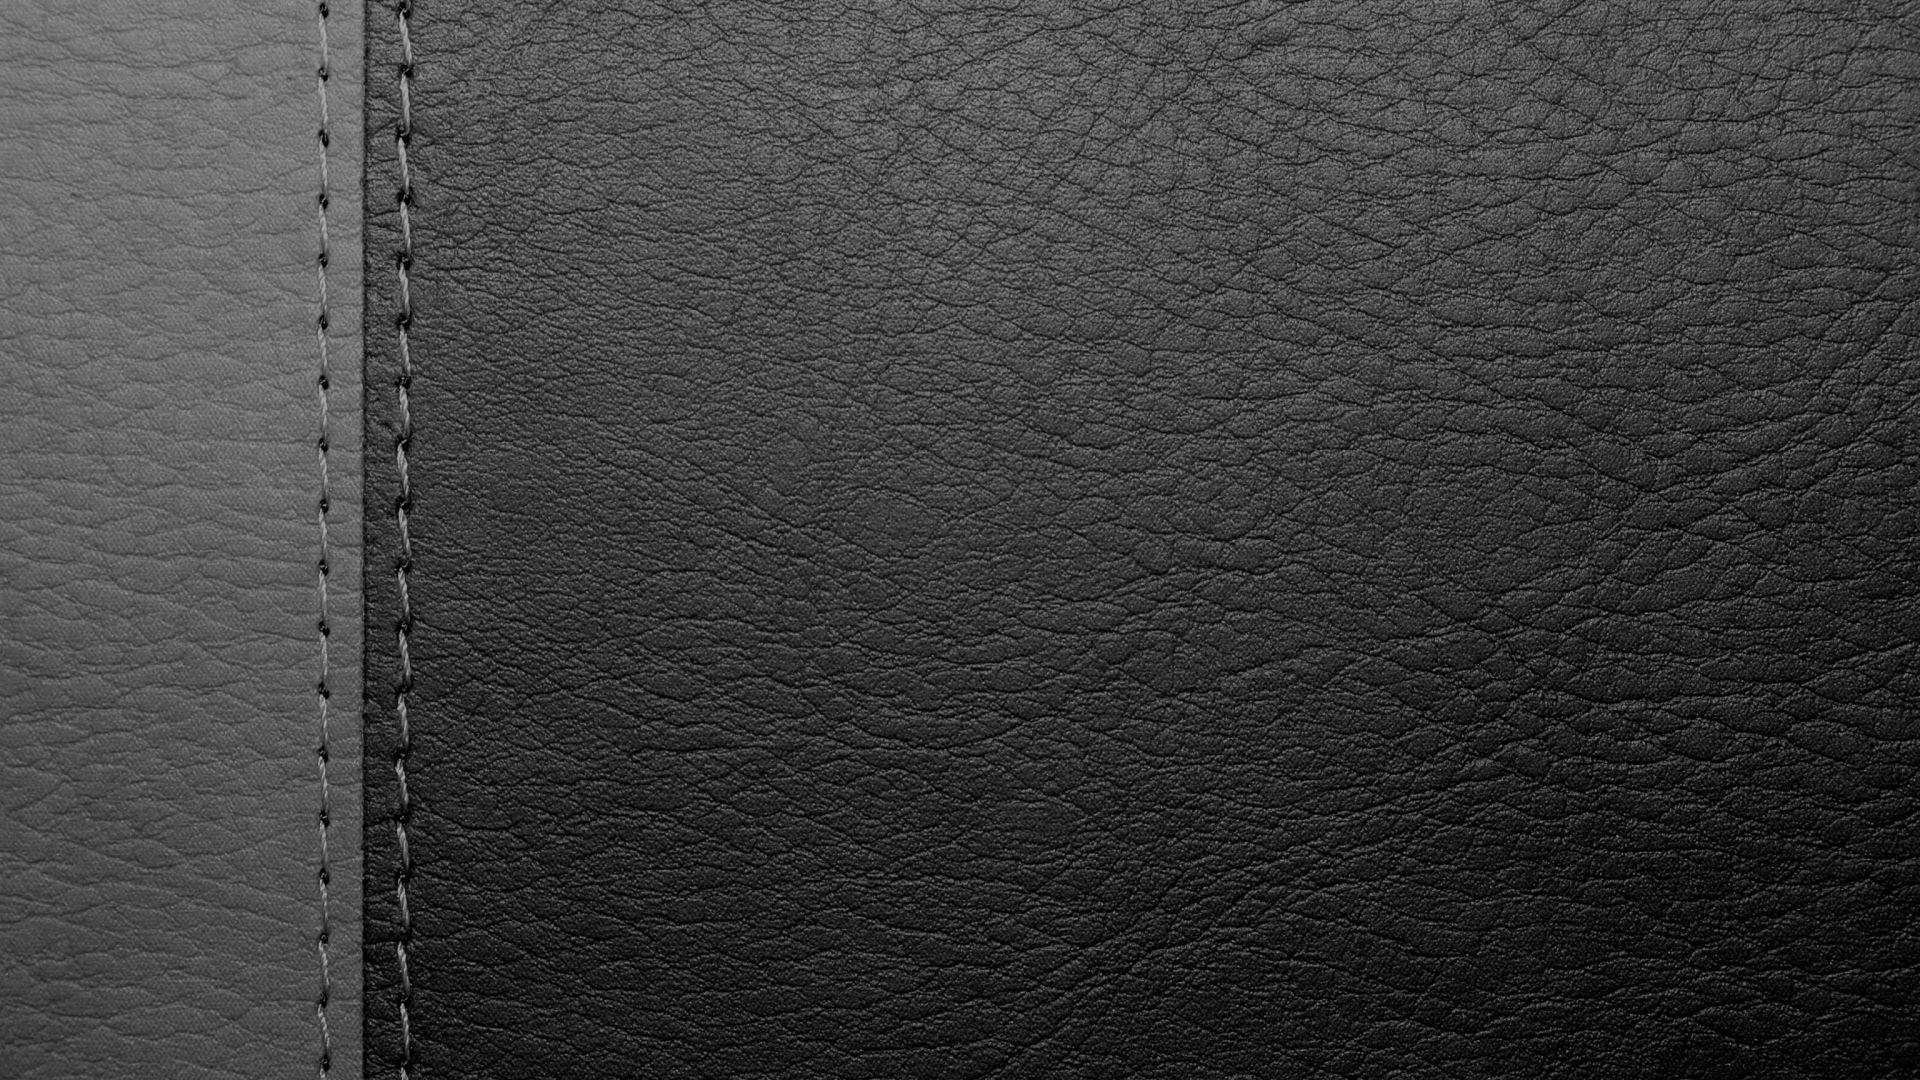 black leather wallpaper